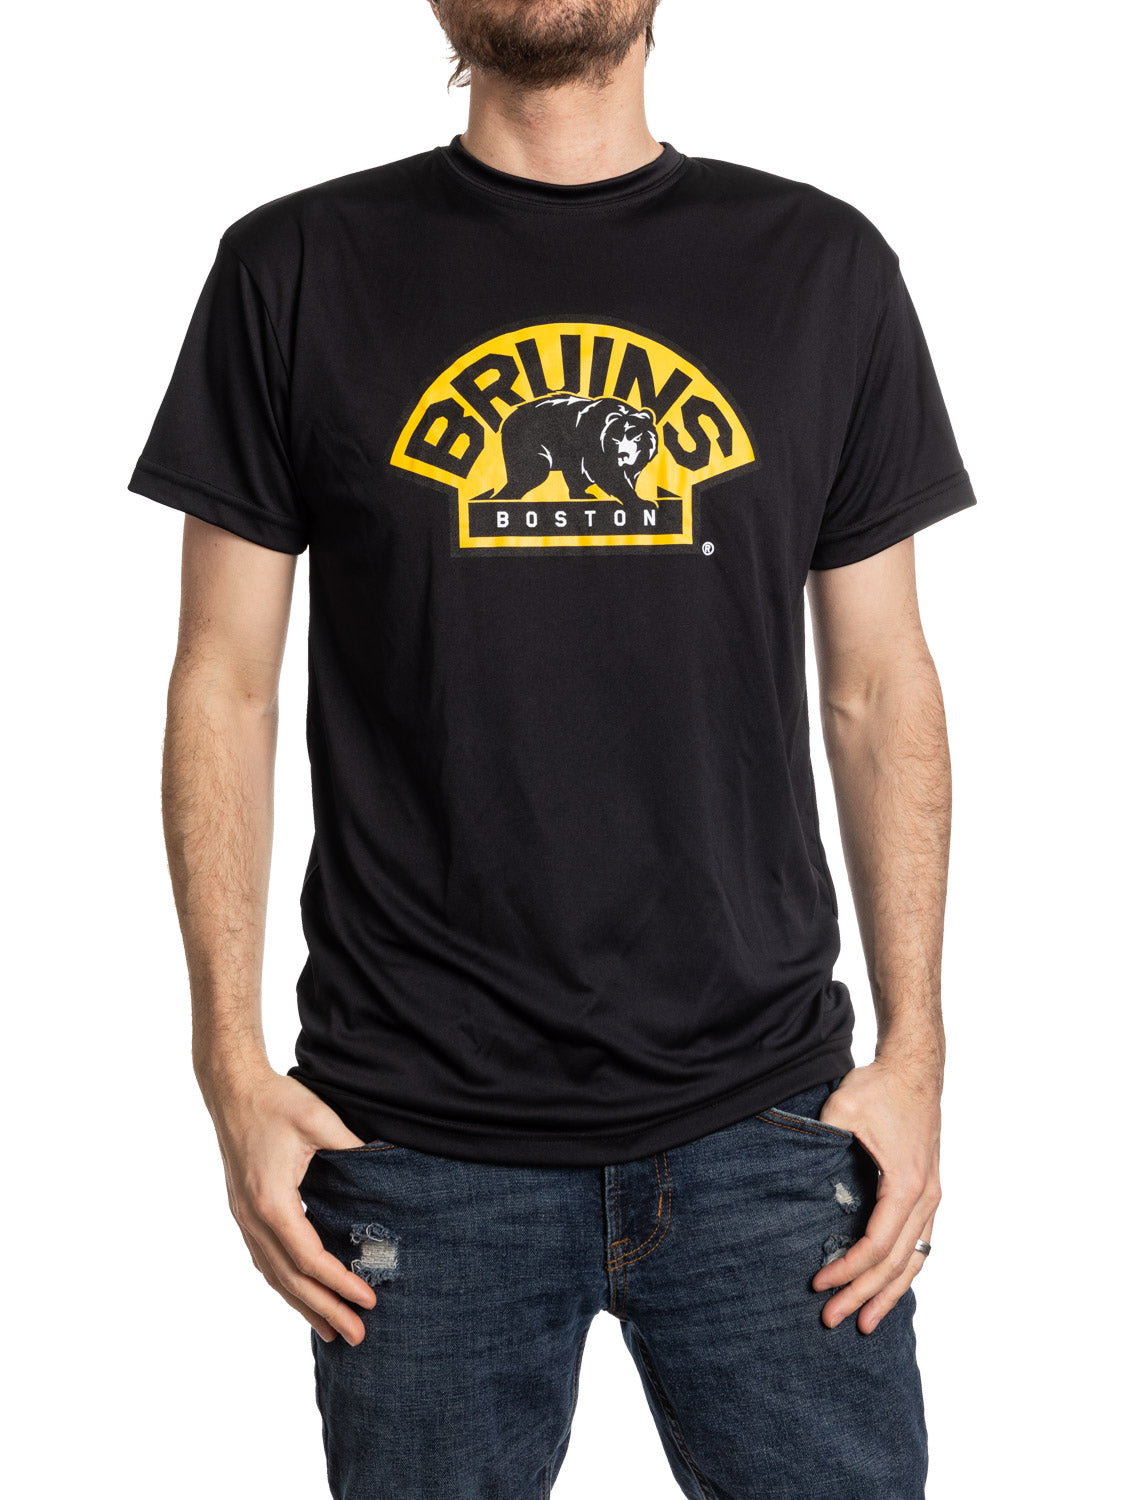 Boston Bruins Short Sleeve Rashguard T Shirt - Alternate Logo